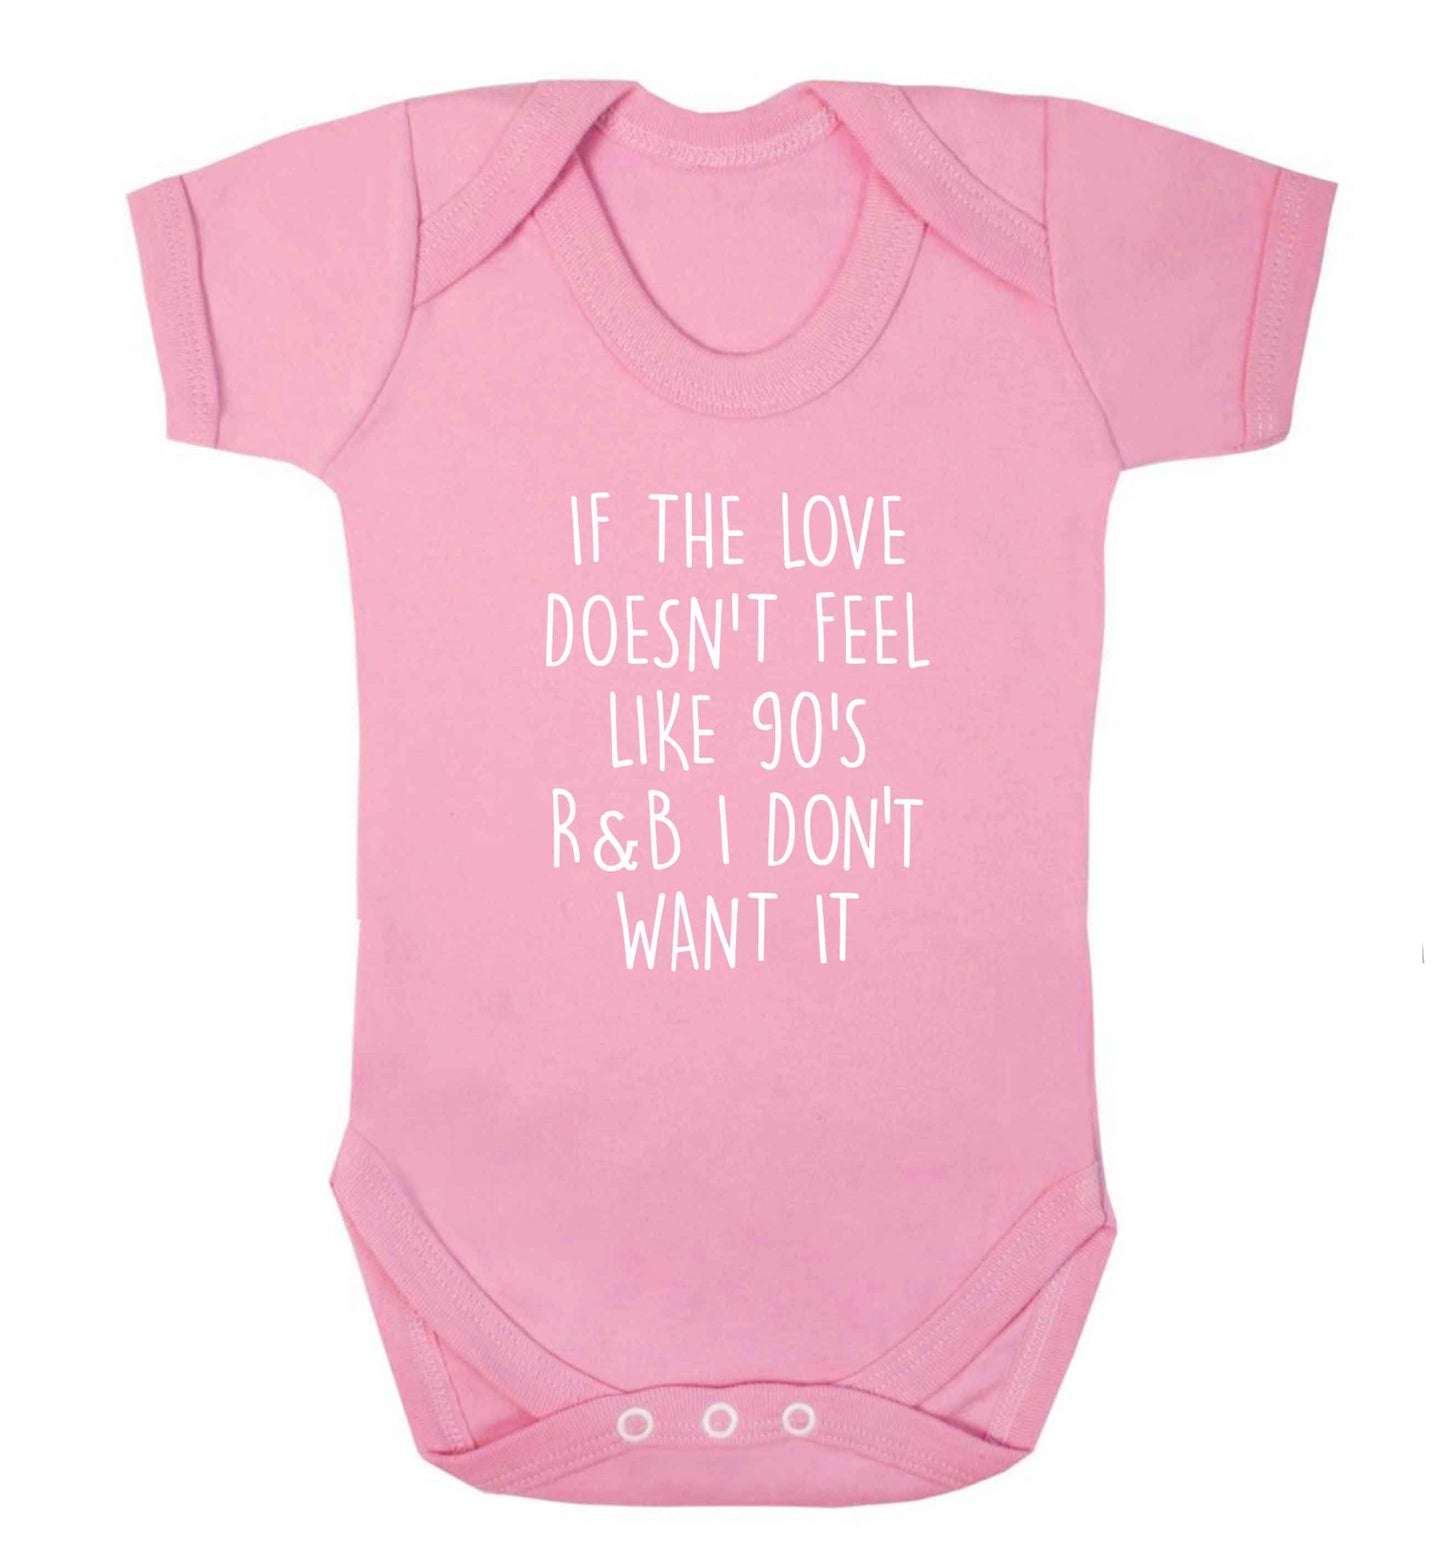 If the love doesn't feel like 90's r&b I don't want it baby vest pale pink 18-24 months